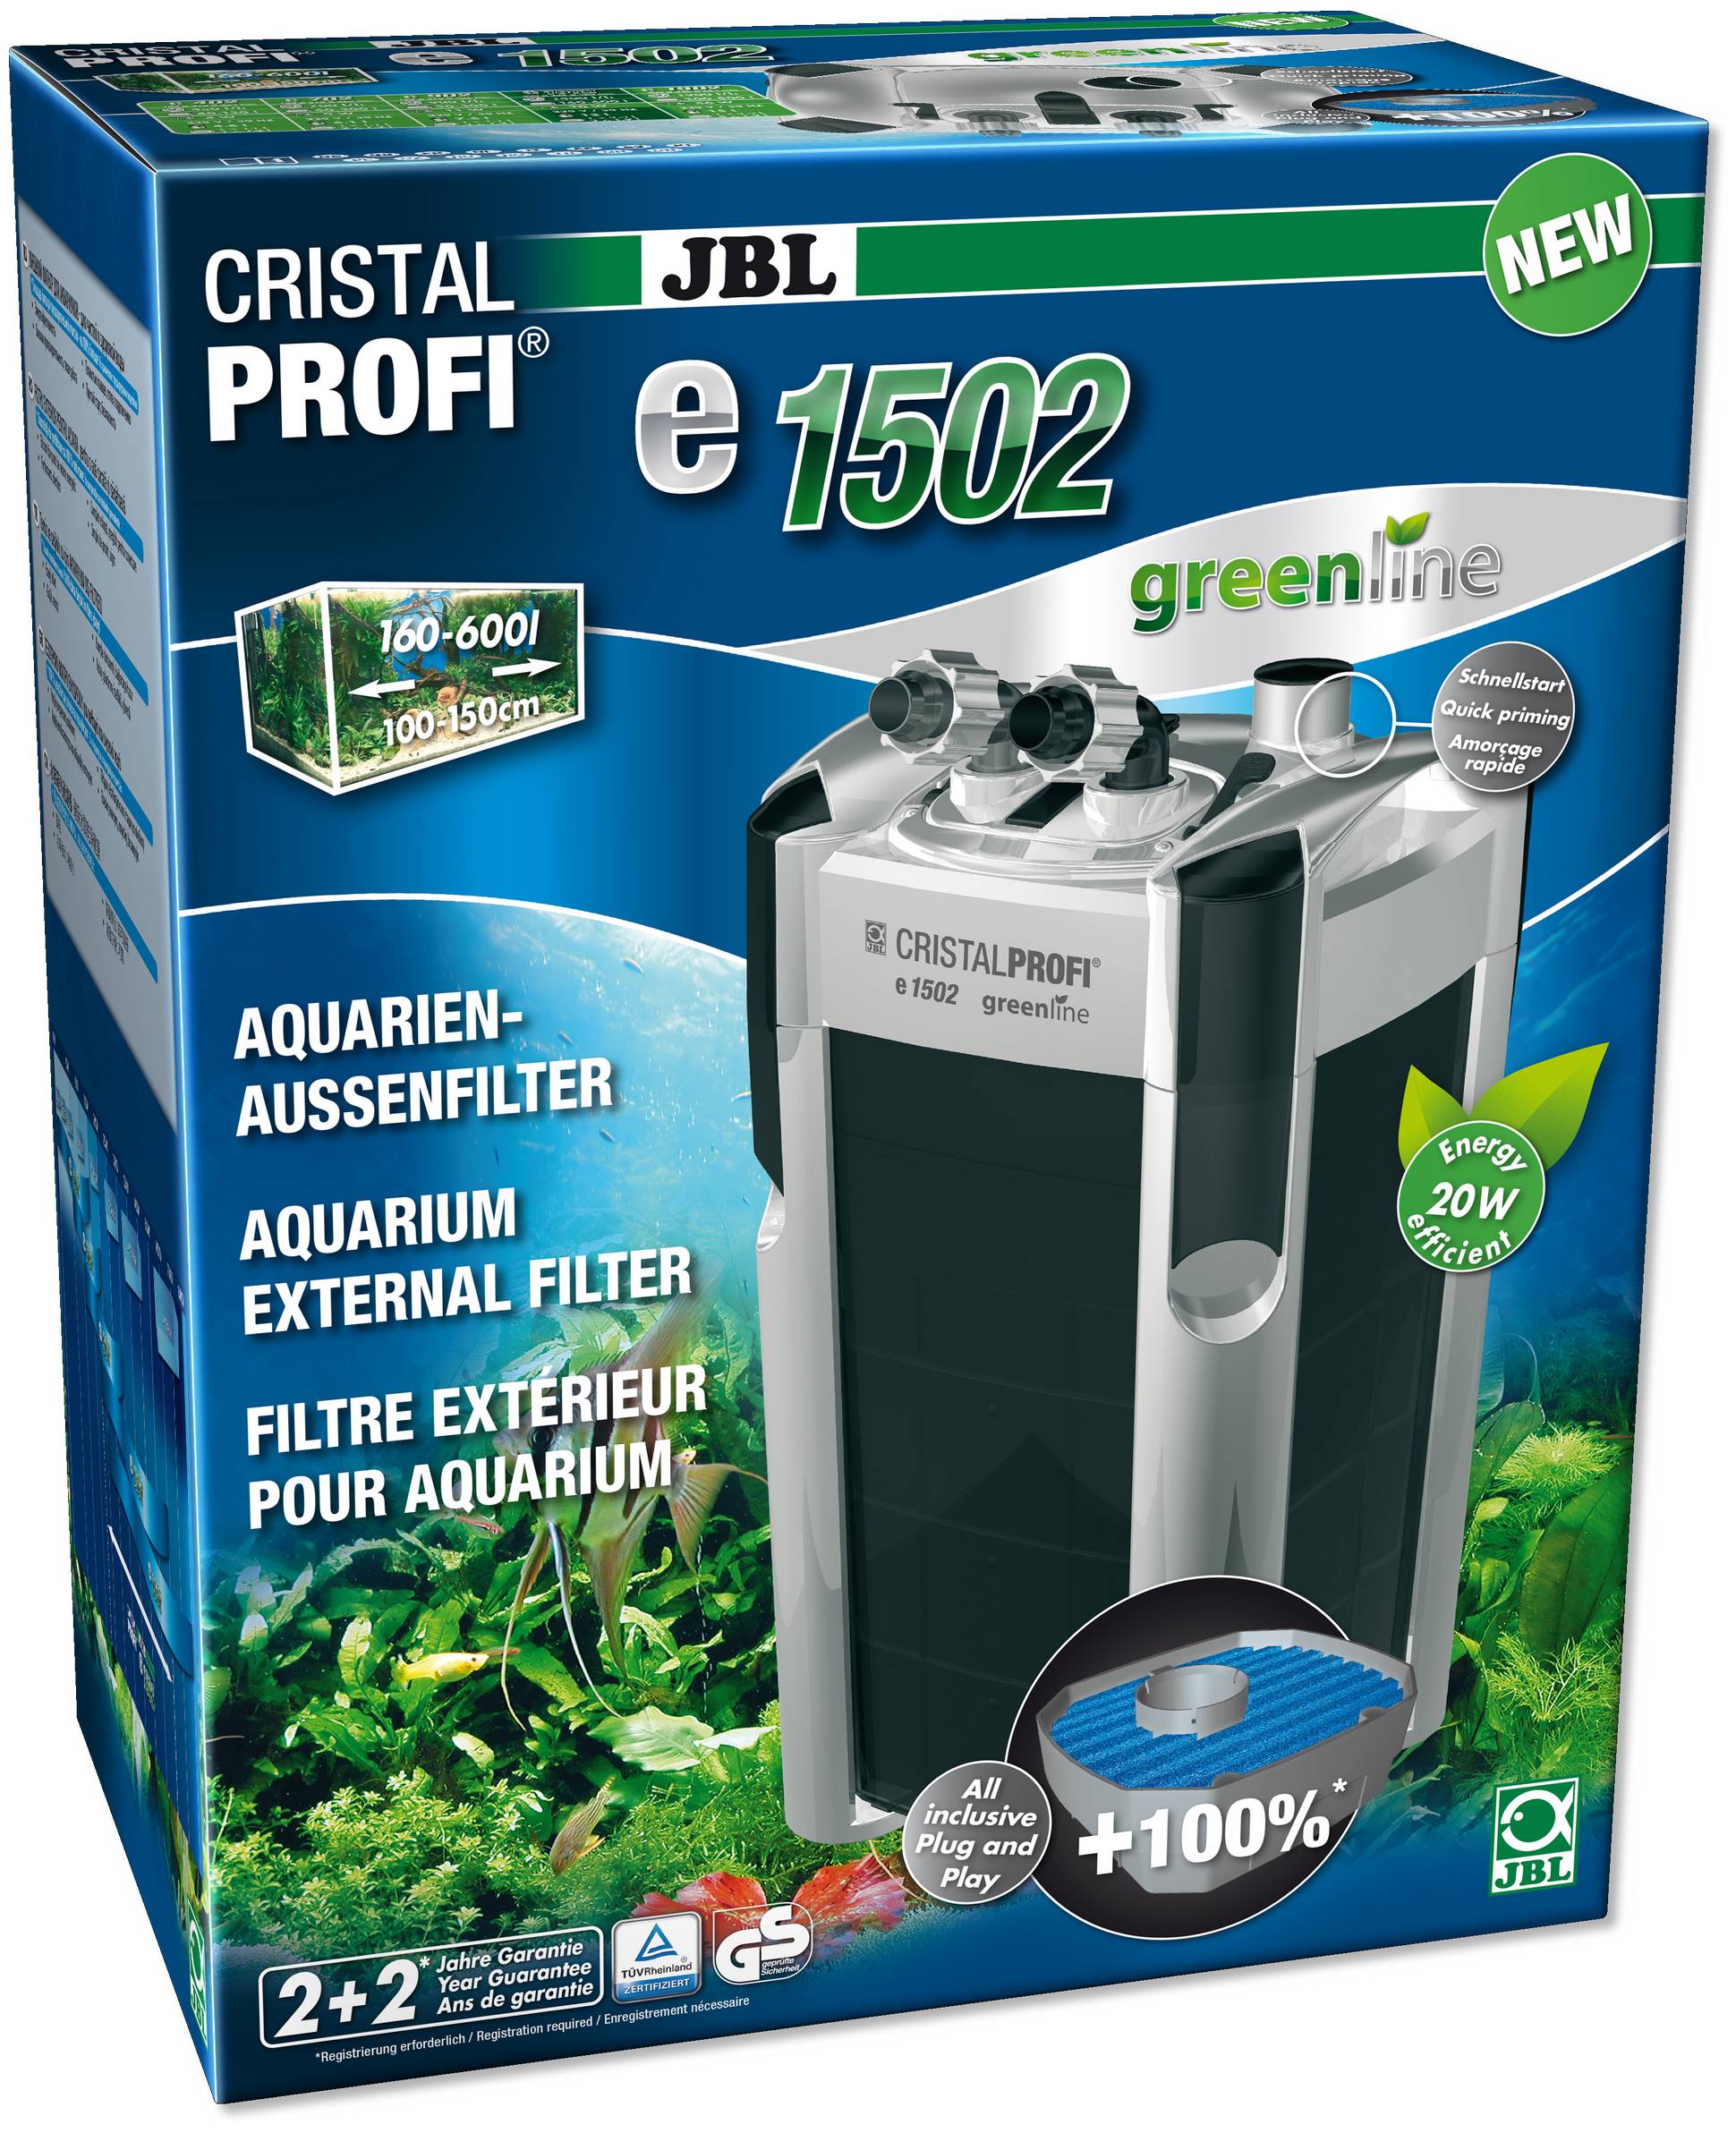 el filtro exterior Jbl Cristal Profi Greenline 1502 es el más potente filtro de la firma Jbl